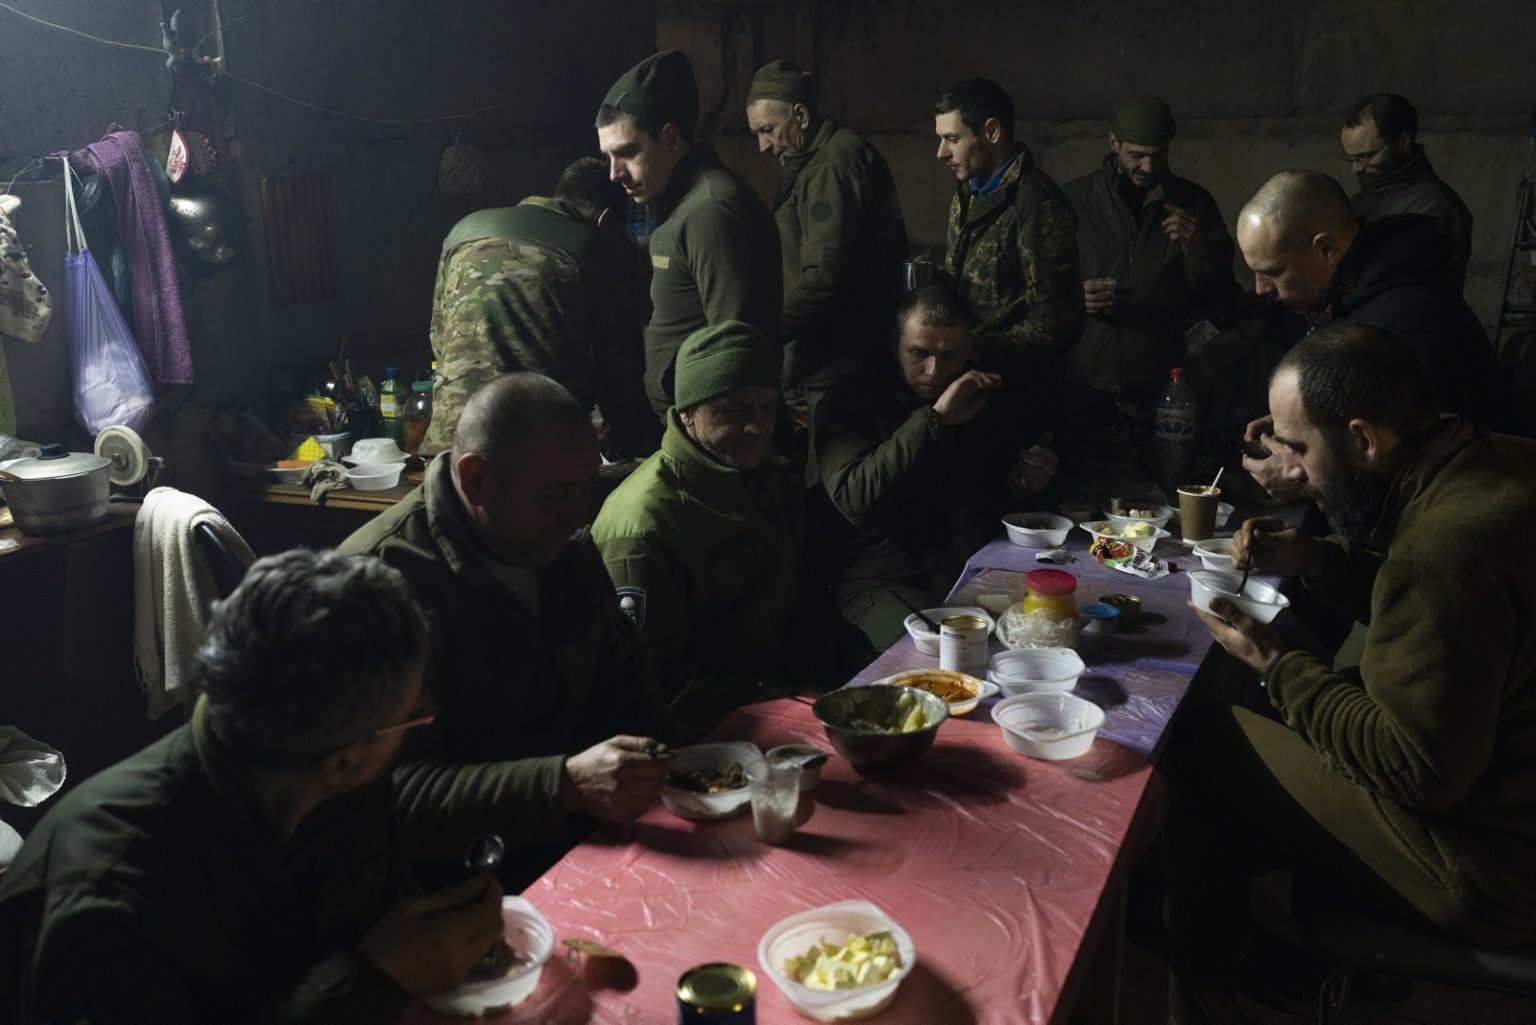 UKRAINE, Bakhmut. January 28, 2023 - Ukrainian soldiers eat lunch inside a basement of a building used as a base in Bakhmut.  ><
UCRAINA, Bakhmut. 28 gennaio 2023 - Soldati ucraini pranzano nel seminterrato di un edificio usato come base a Bakhmut.